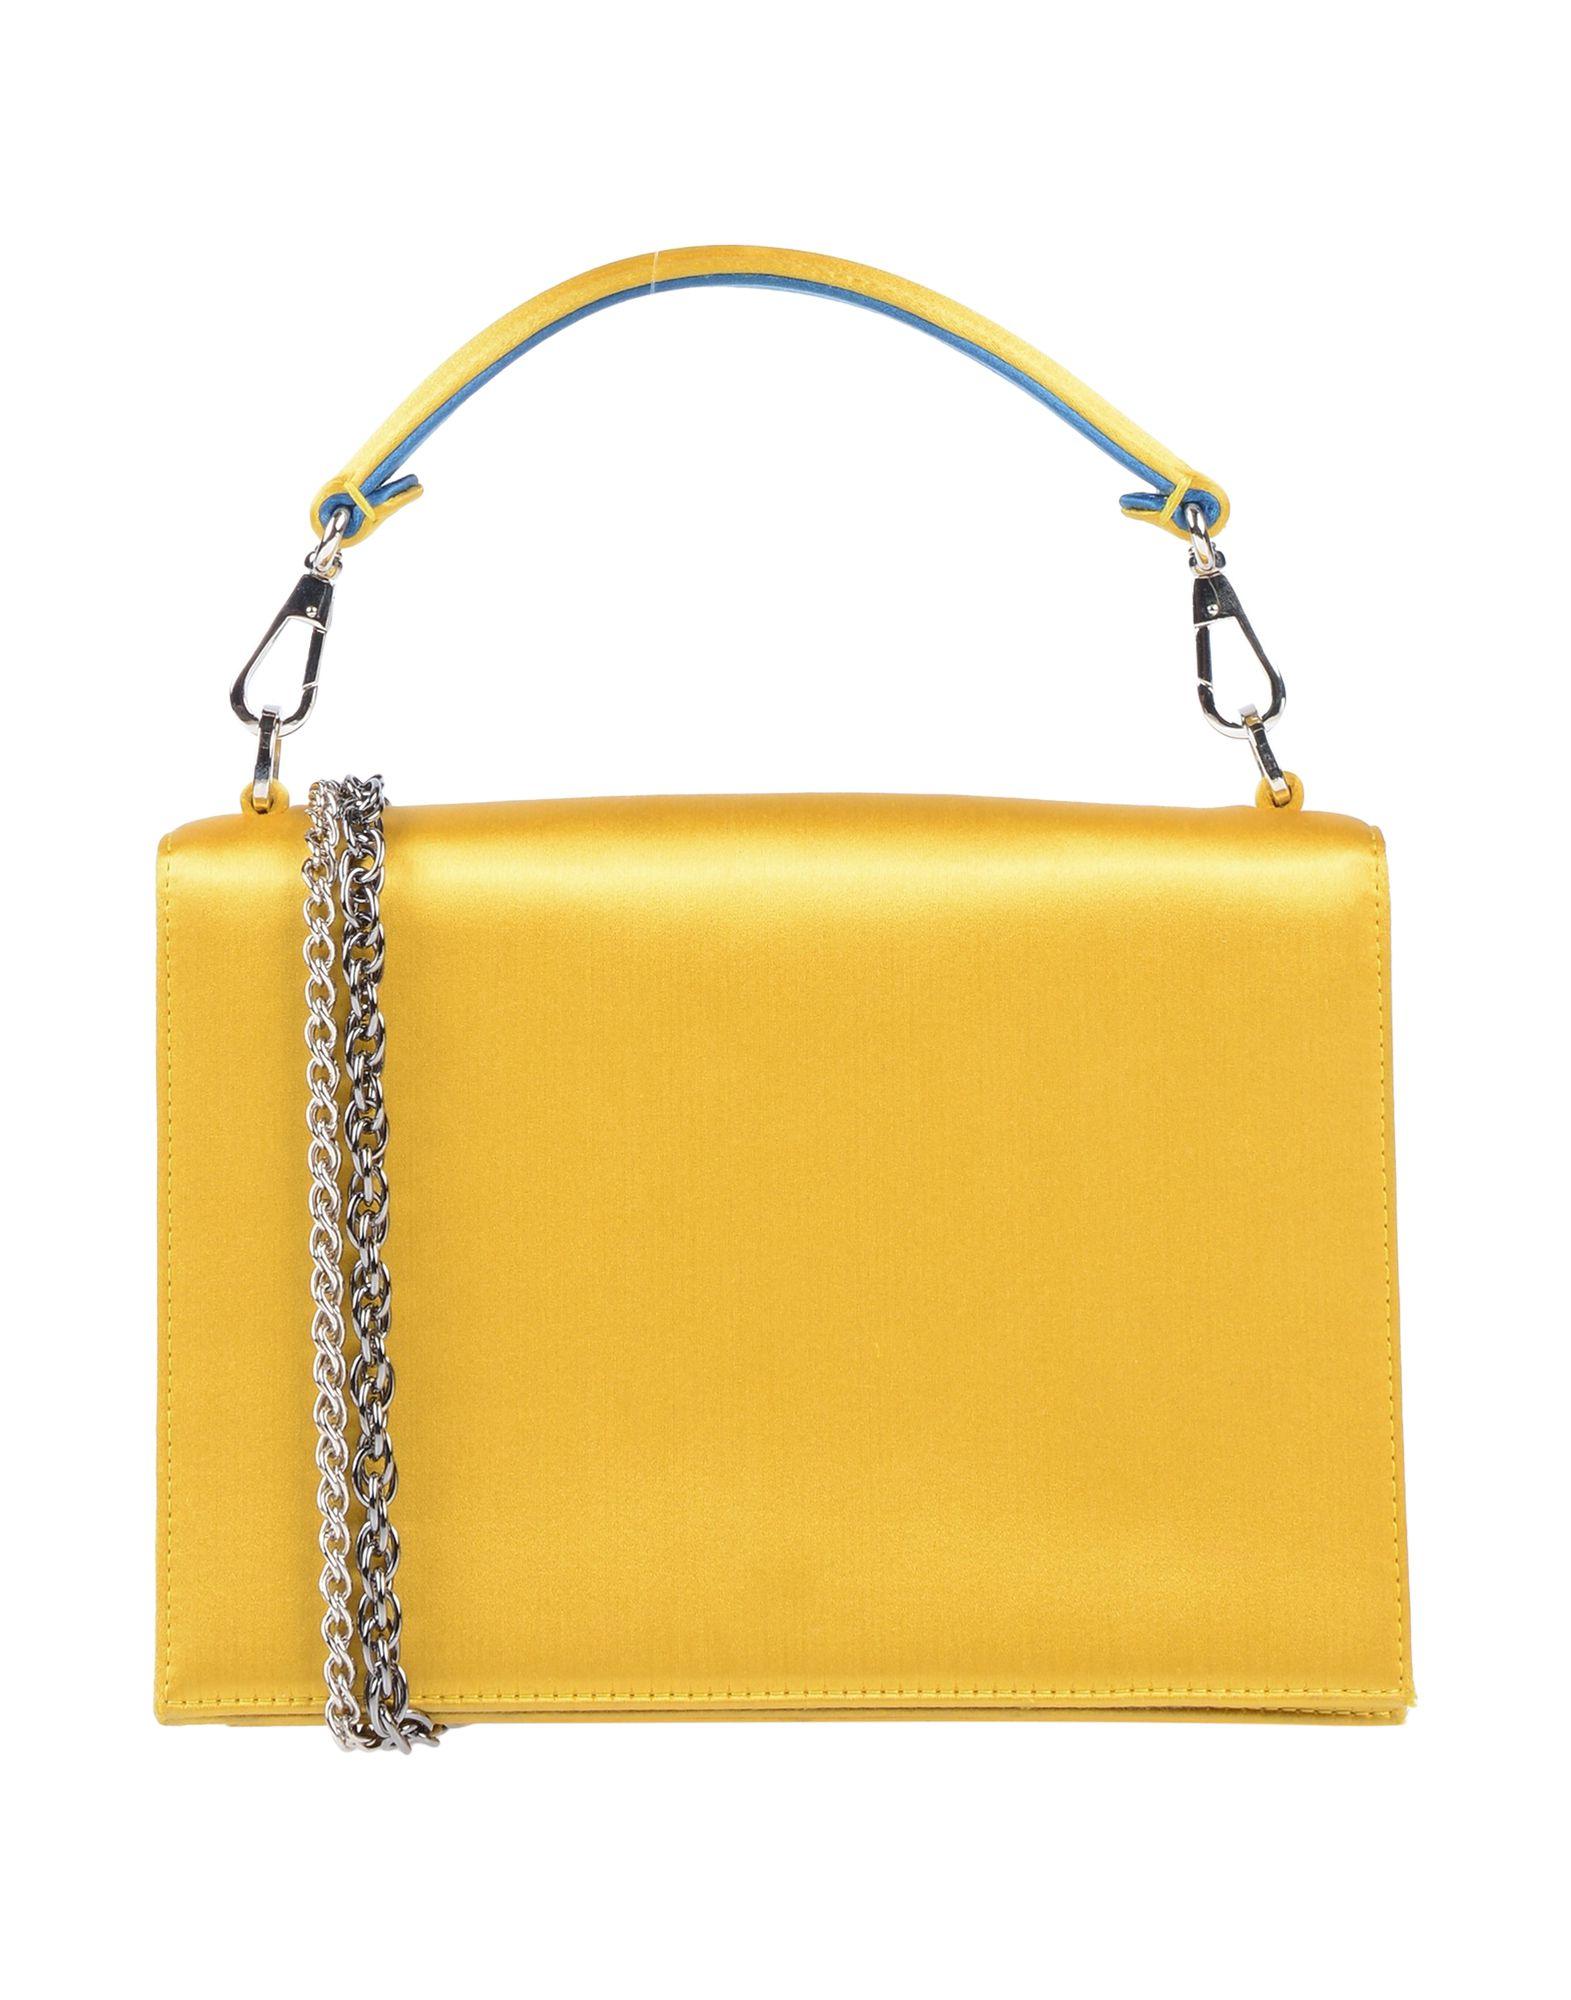 Rodo Satin Handbag in Yellow - Lyst